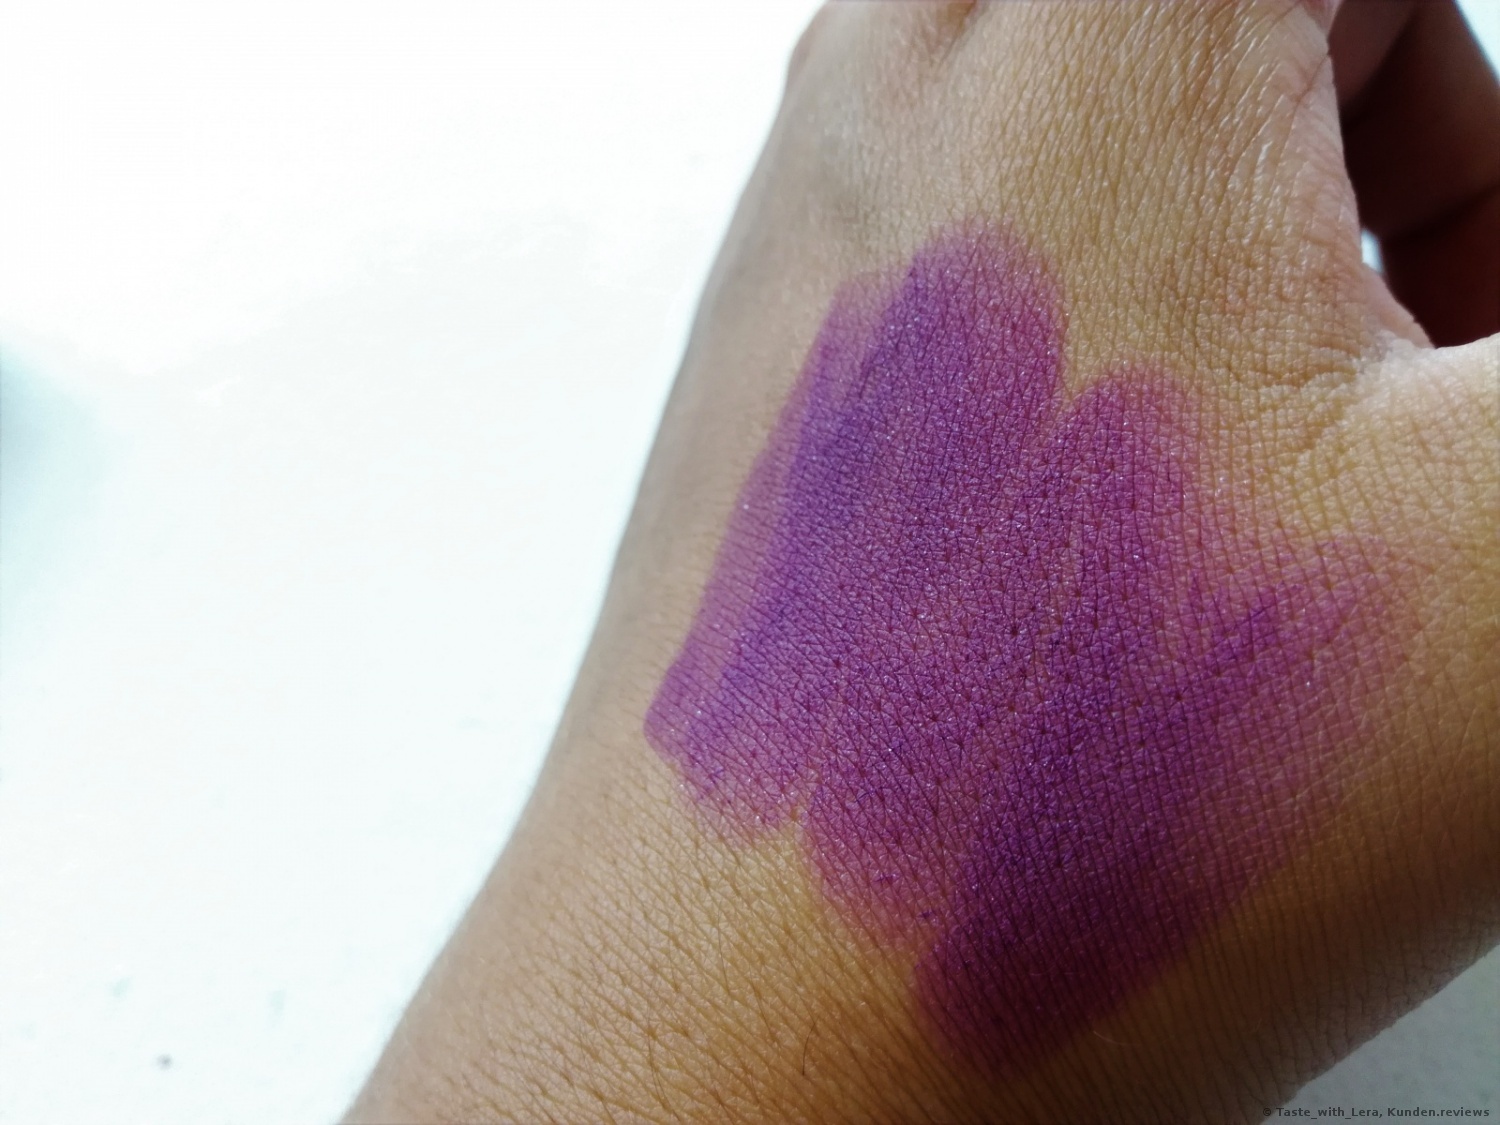 Sleek True Color Lipstick # N792 Exxxaggerate